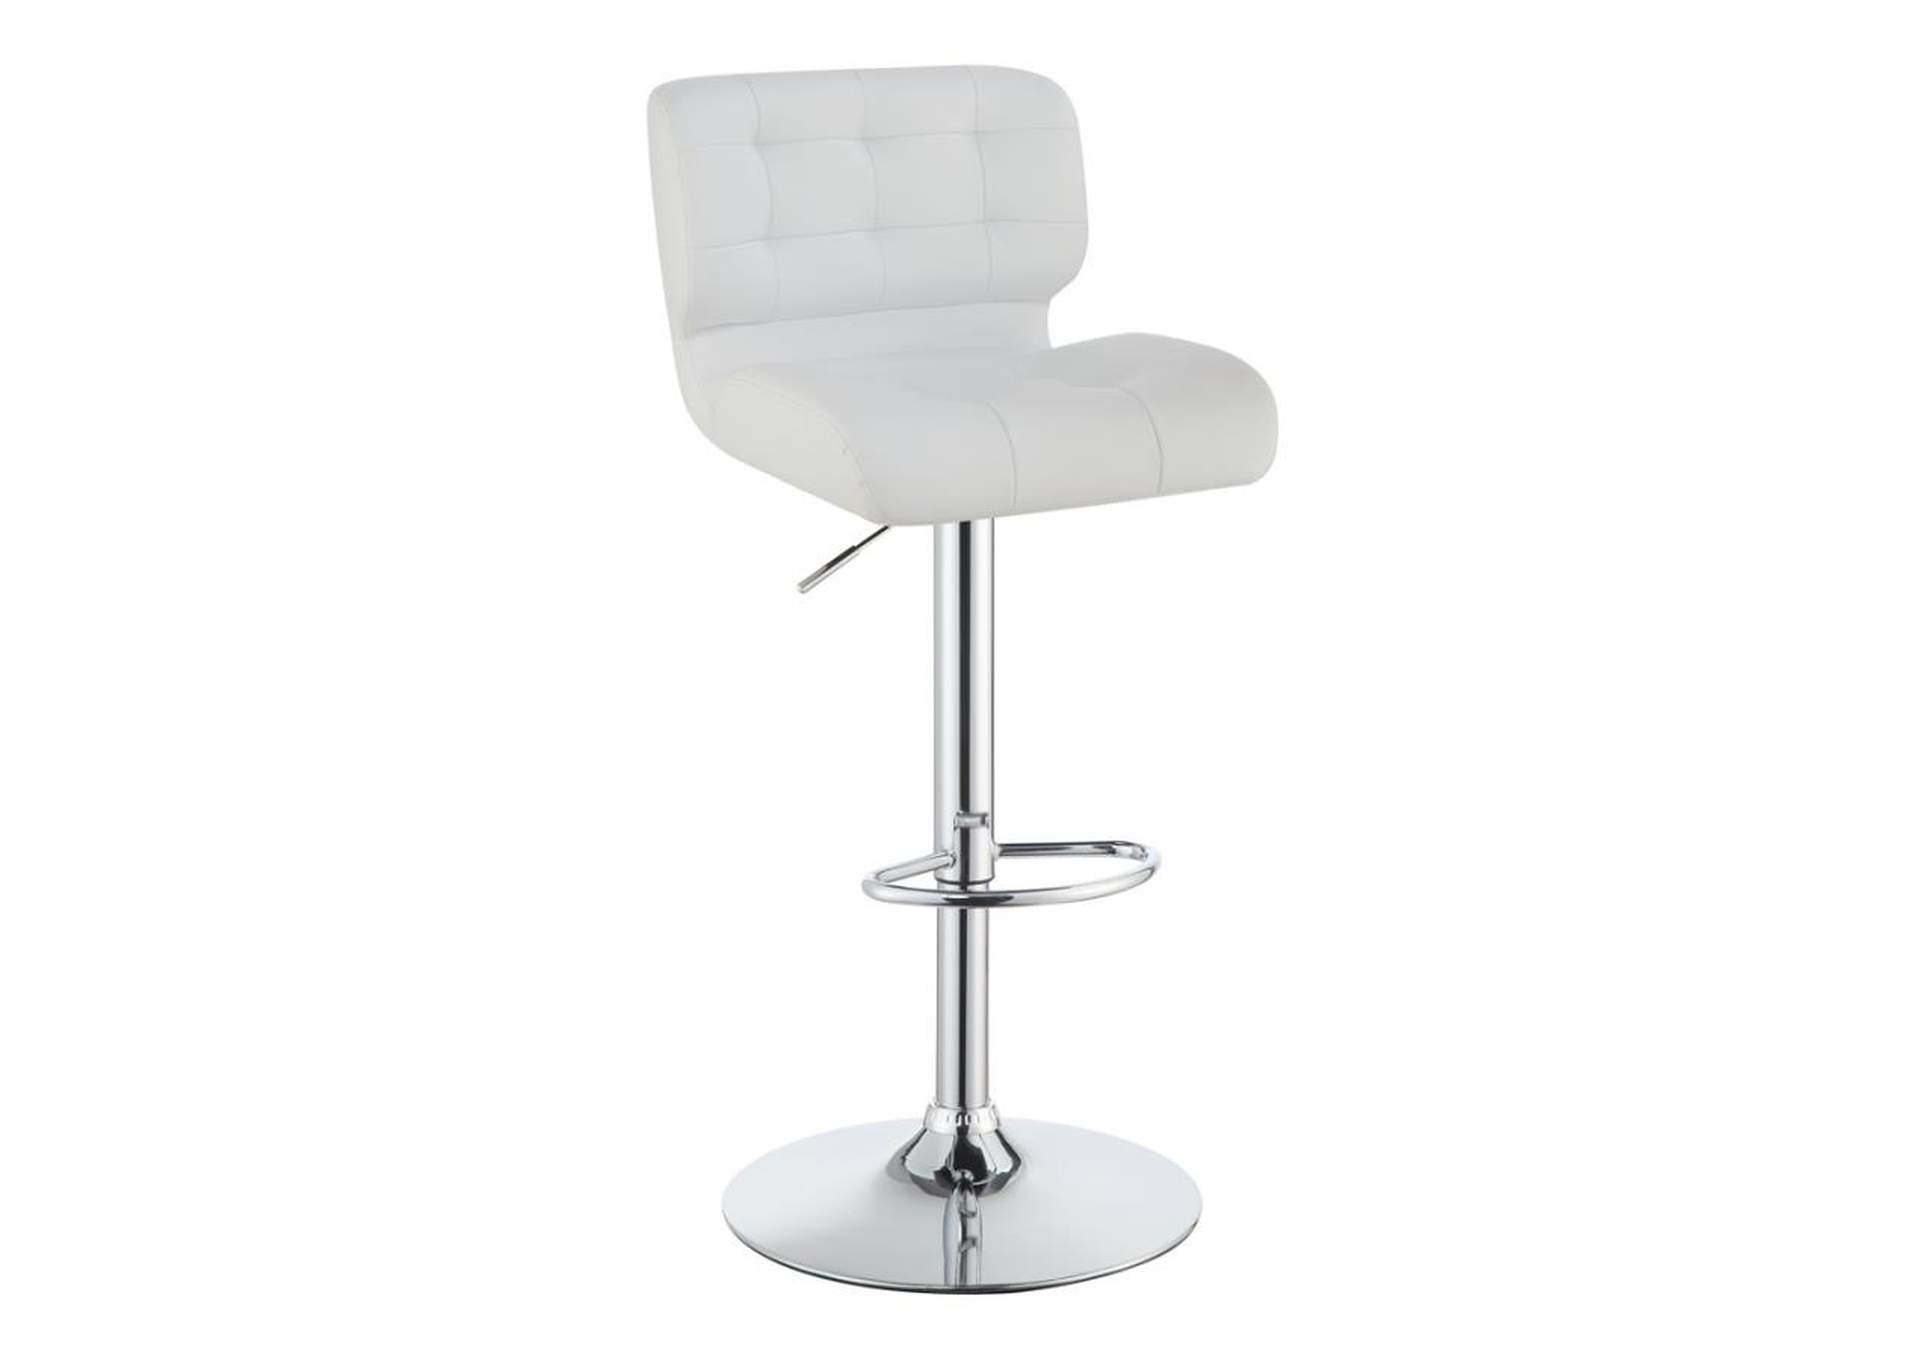 Upholstered Adjustable Bar Stools Chrome and White (Set of 2),Coaster Furniture